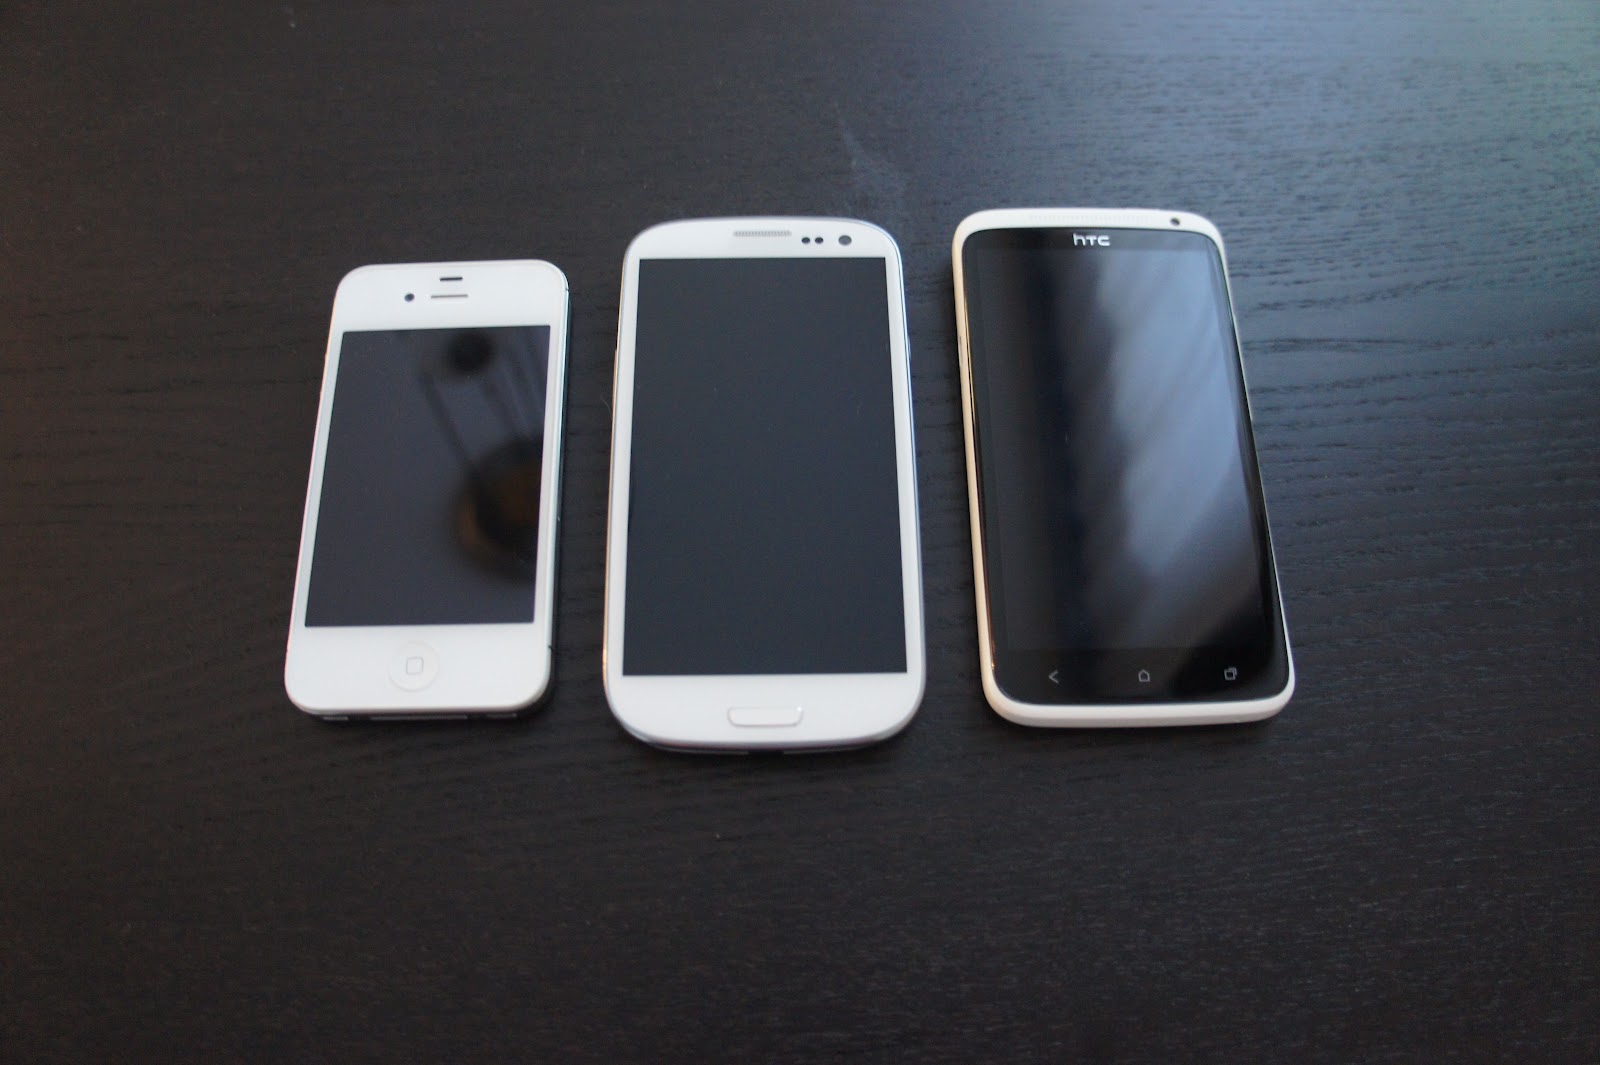 dadenjo - Der Technikblog: Samsung Galaxy S3 vs HTC One X vs iPhone 4S